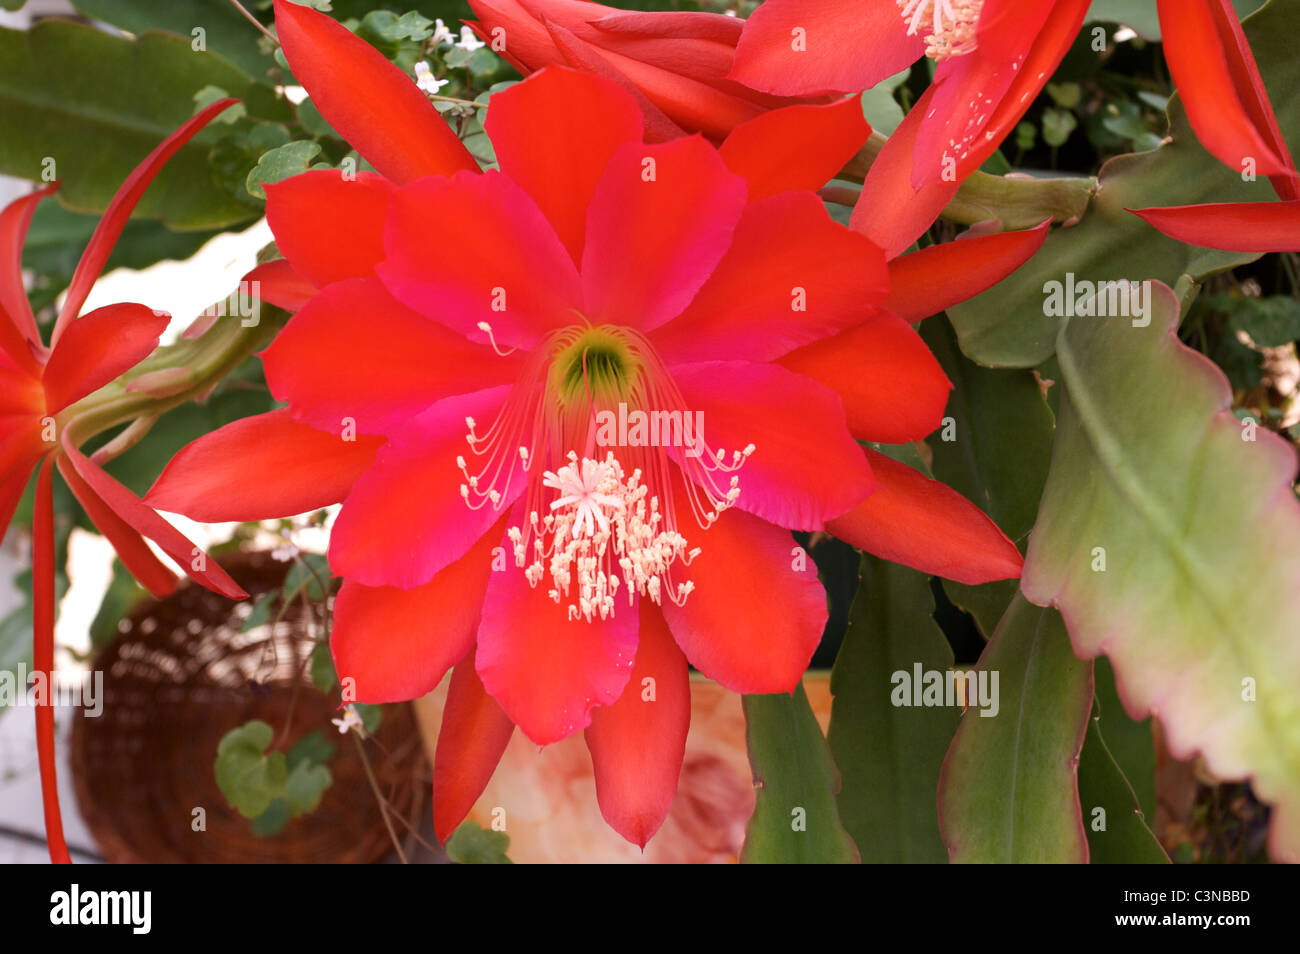 Epiphyllum 'Slightly Sassy' red cactus flowers in conservatory Stock Photo